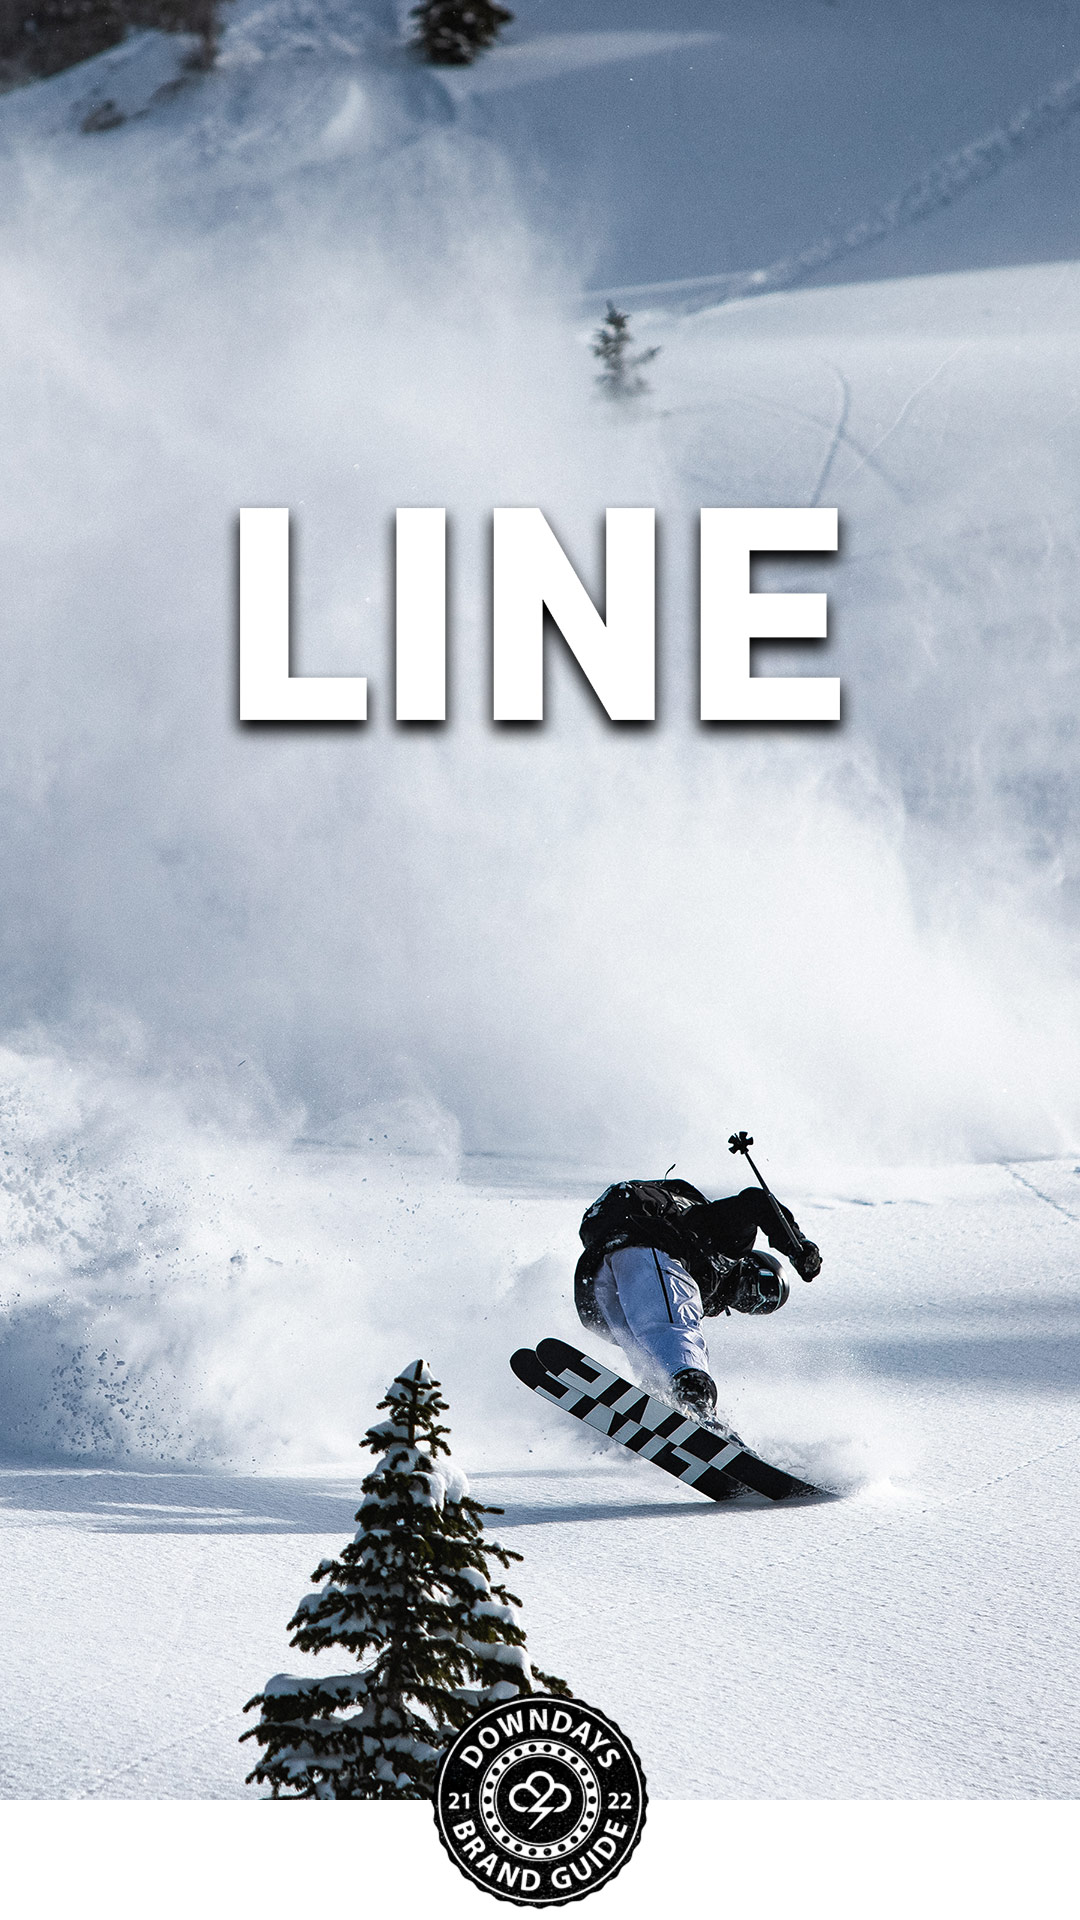 Line Skis Mobile Header, Downdays 2021/2022 Brand Guide